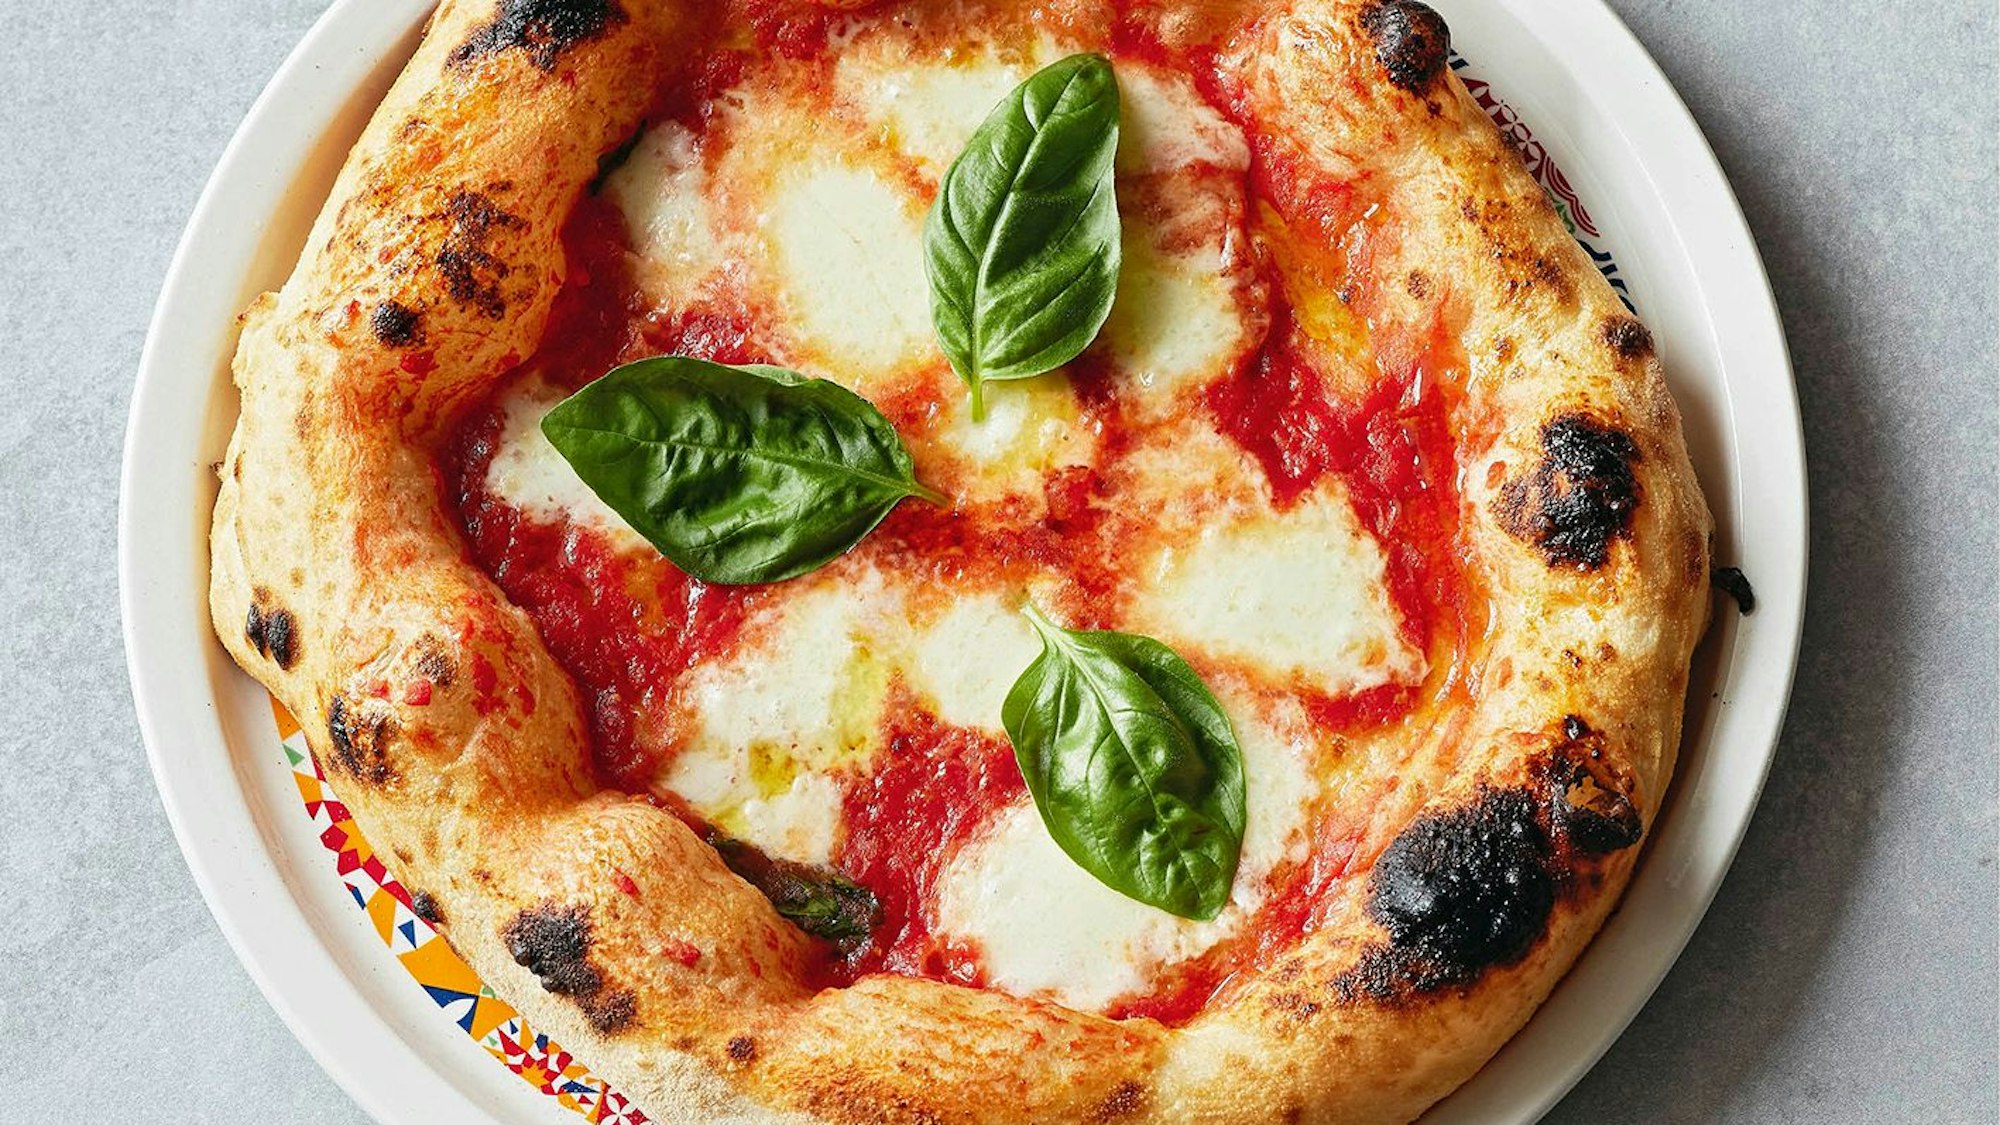 Pizza Margherita aus dem Buch "Pizza Napoletana"